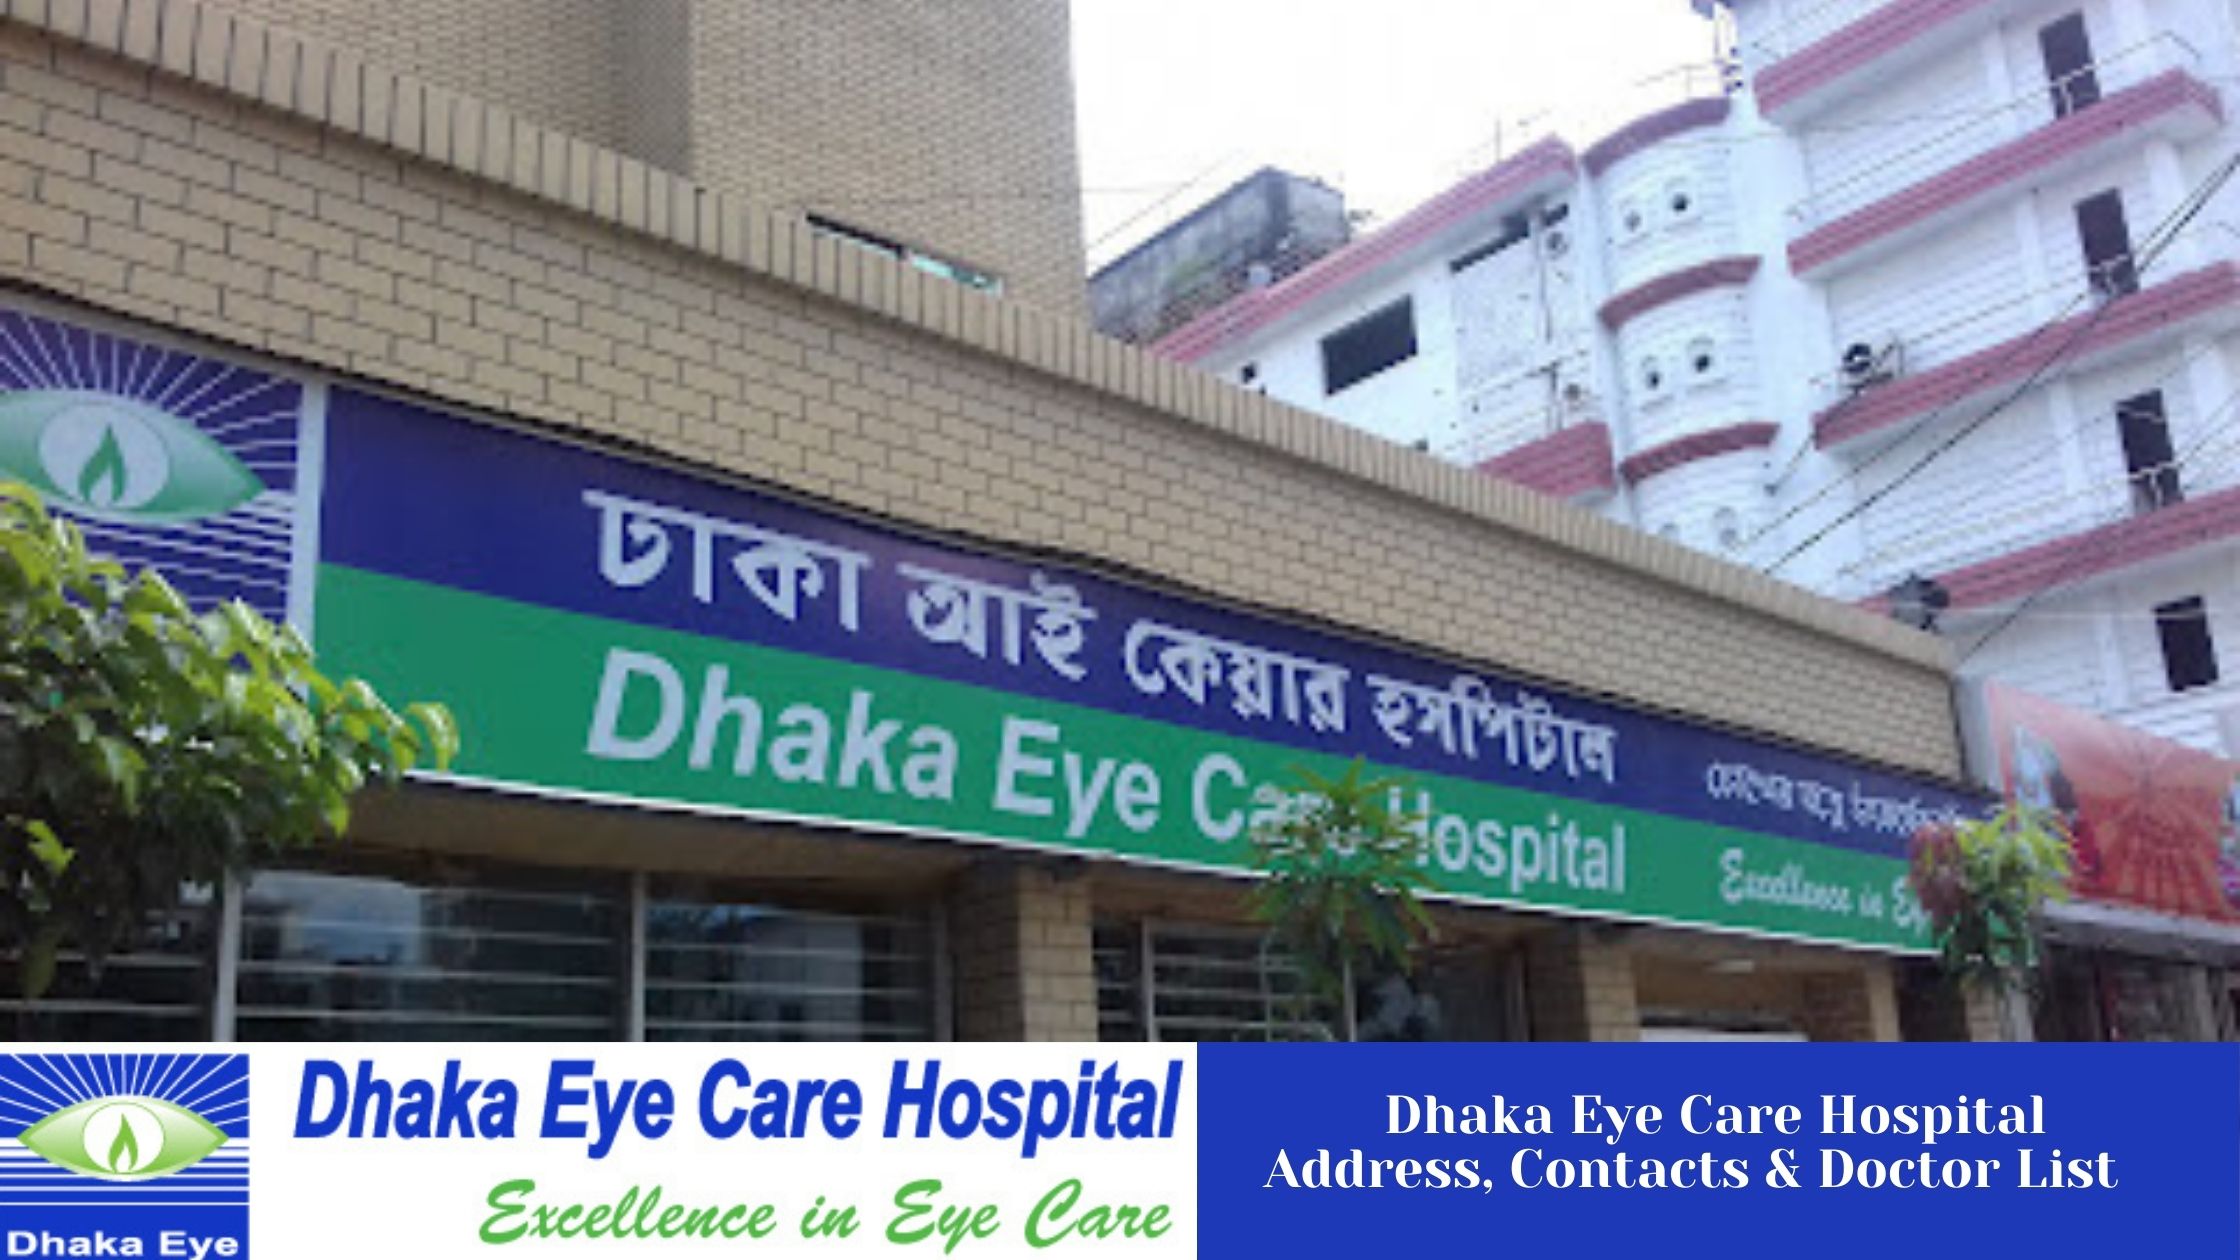 Dhaka EYE CARE HOSPITAL Uttara Address Contacts Doctor list